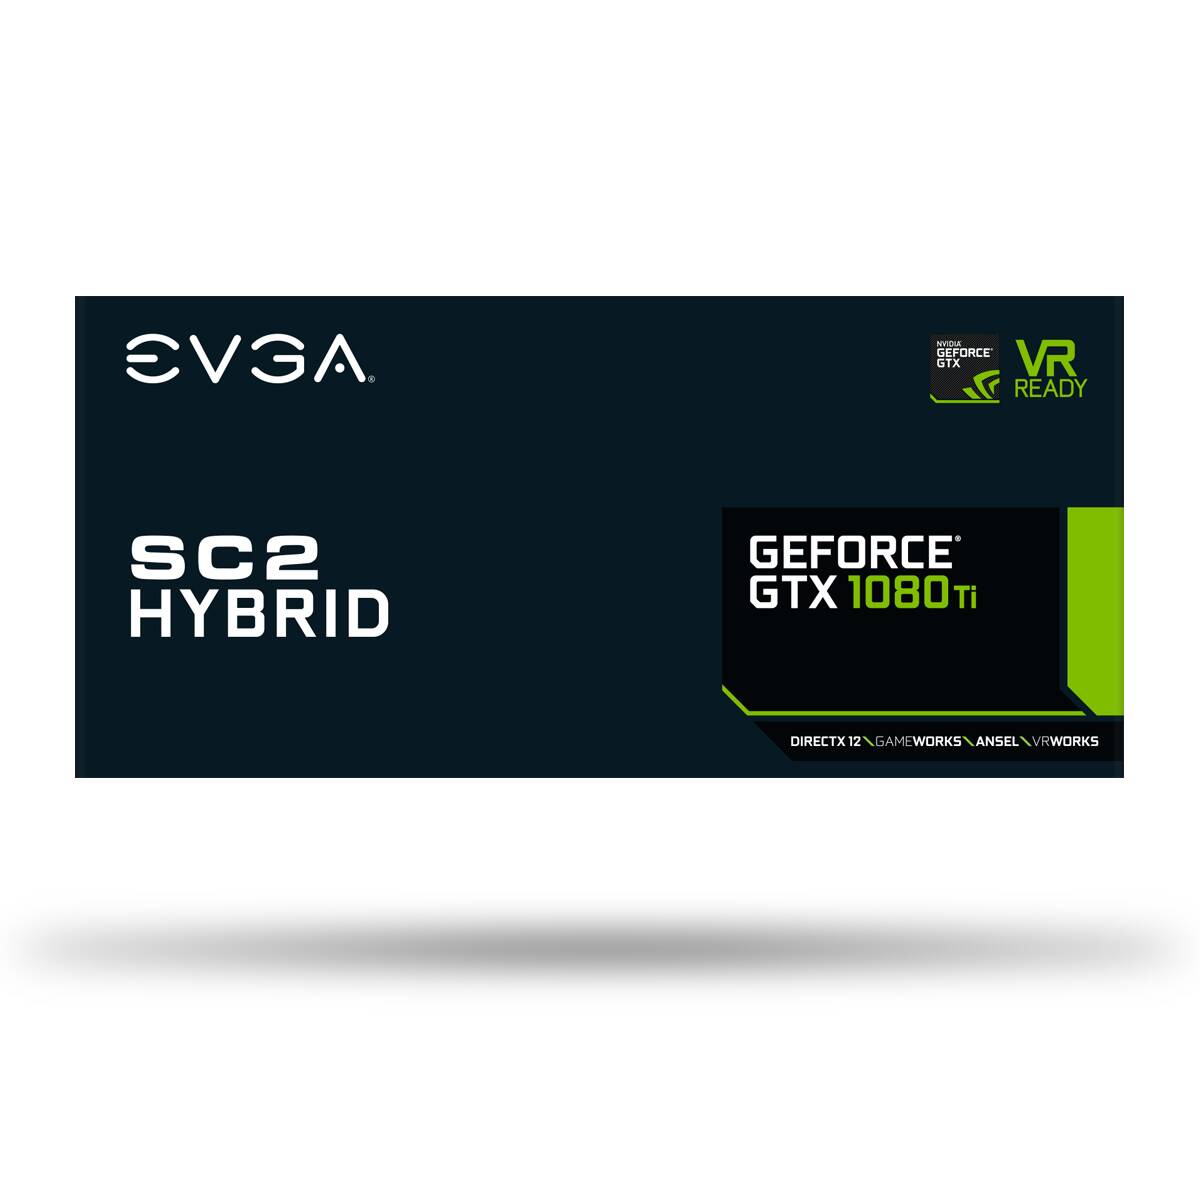 Articles - EVGA GeForce GTX 1080 Ti SC2 HYBRID - EVGA